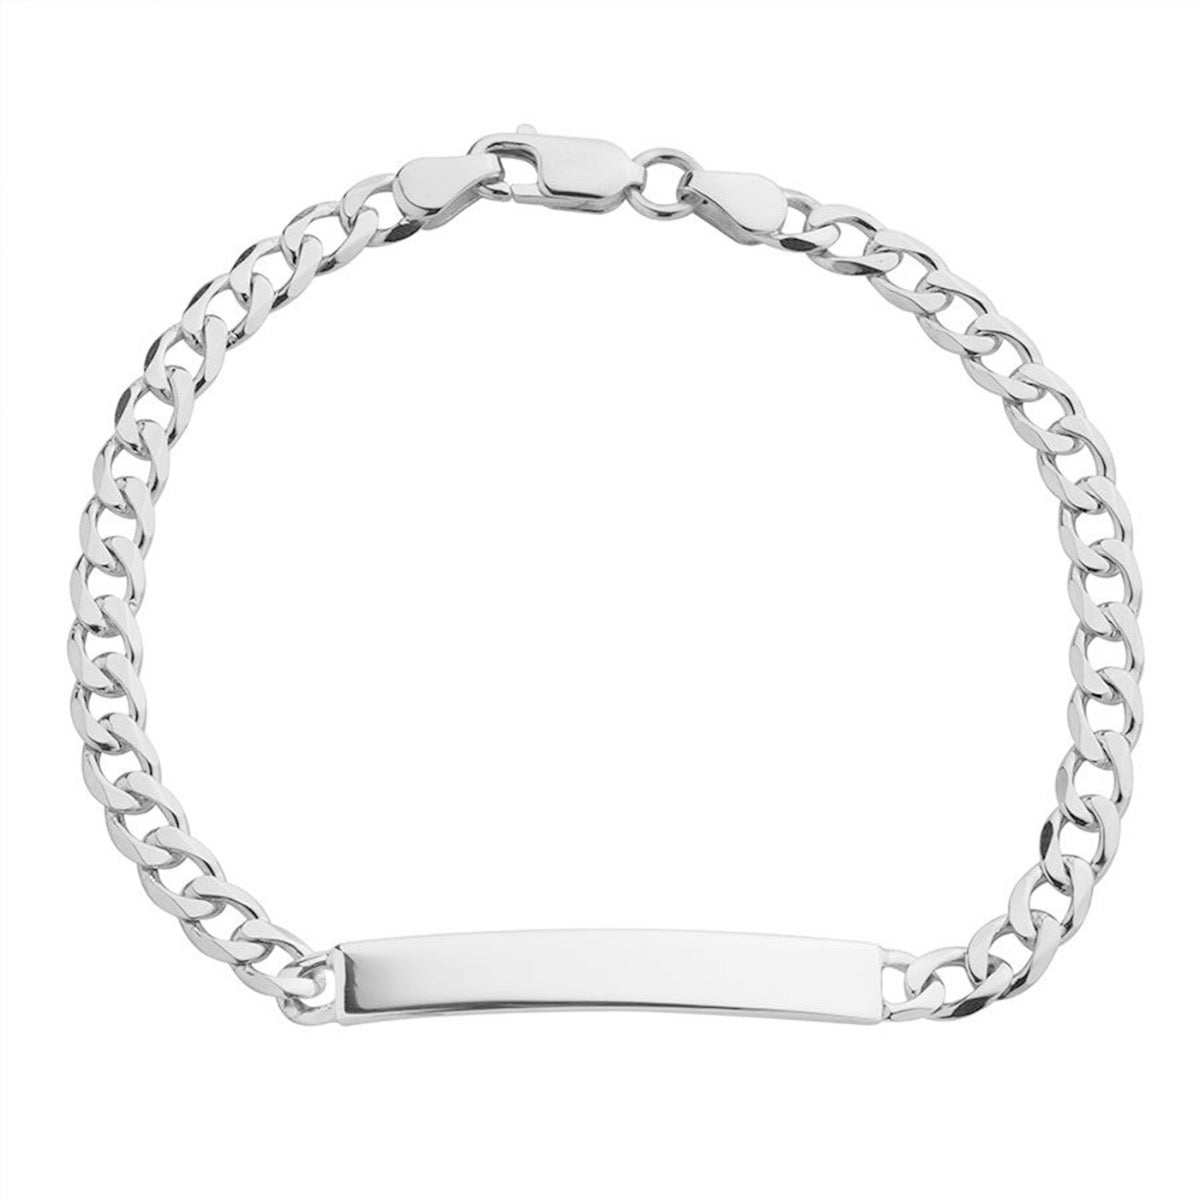 Sterling Silver Identity Bracelet | Hersey & Son Silversmiths